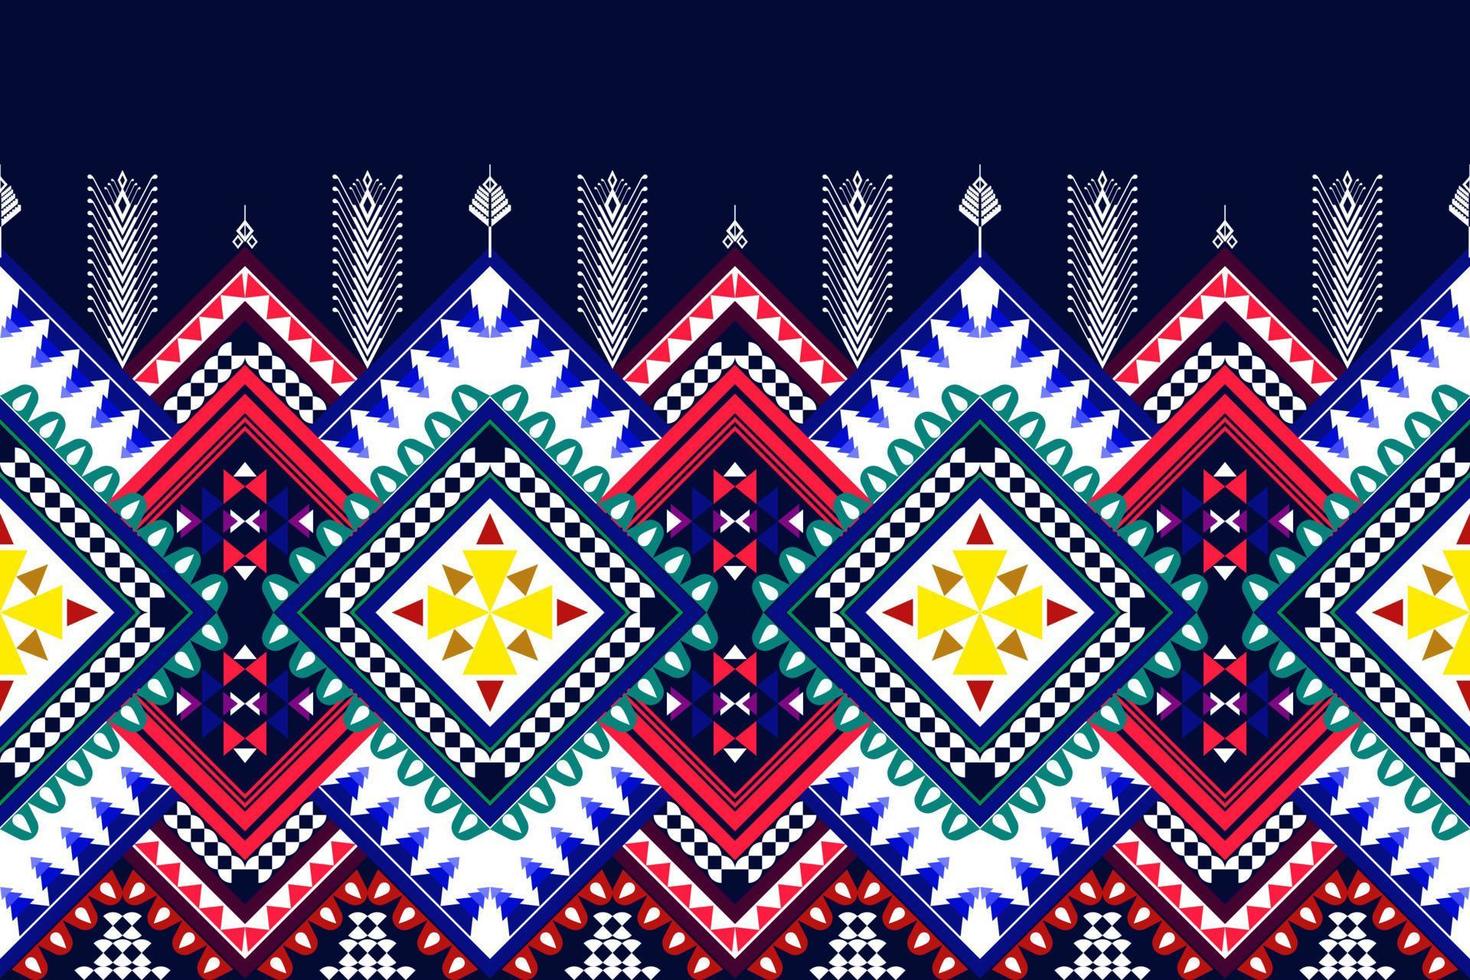 abstrakt geometrisk sömlös design. Aztekisk tyg matta mandala prydnad chevron textil dekoration tapet traditionella broderi vektor illustrationer bakgrund